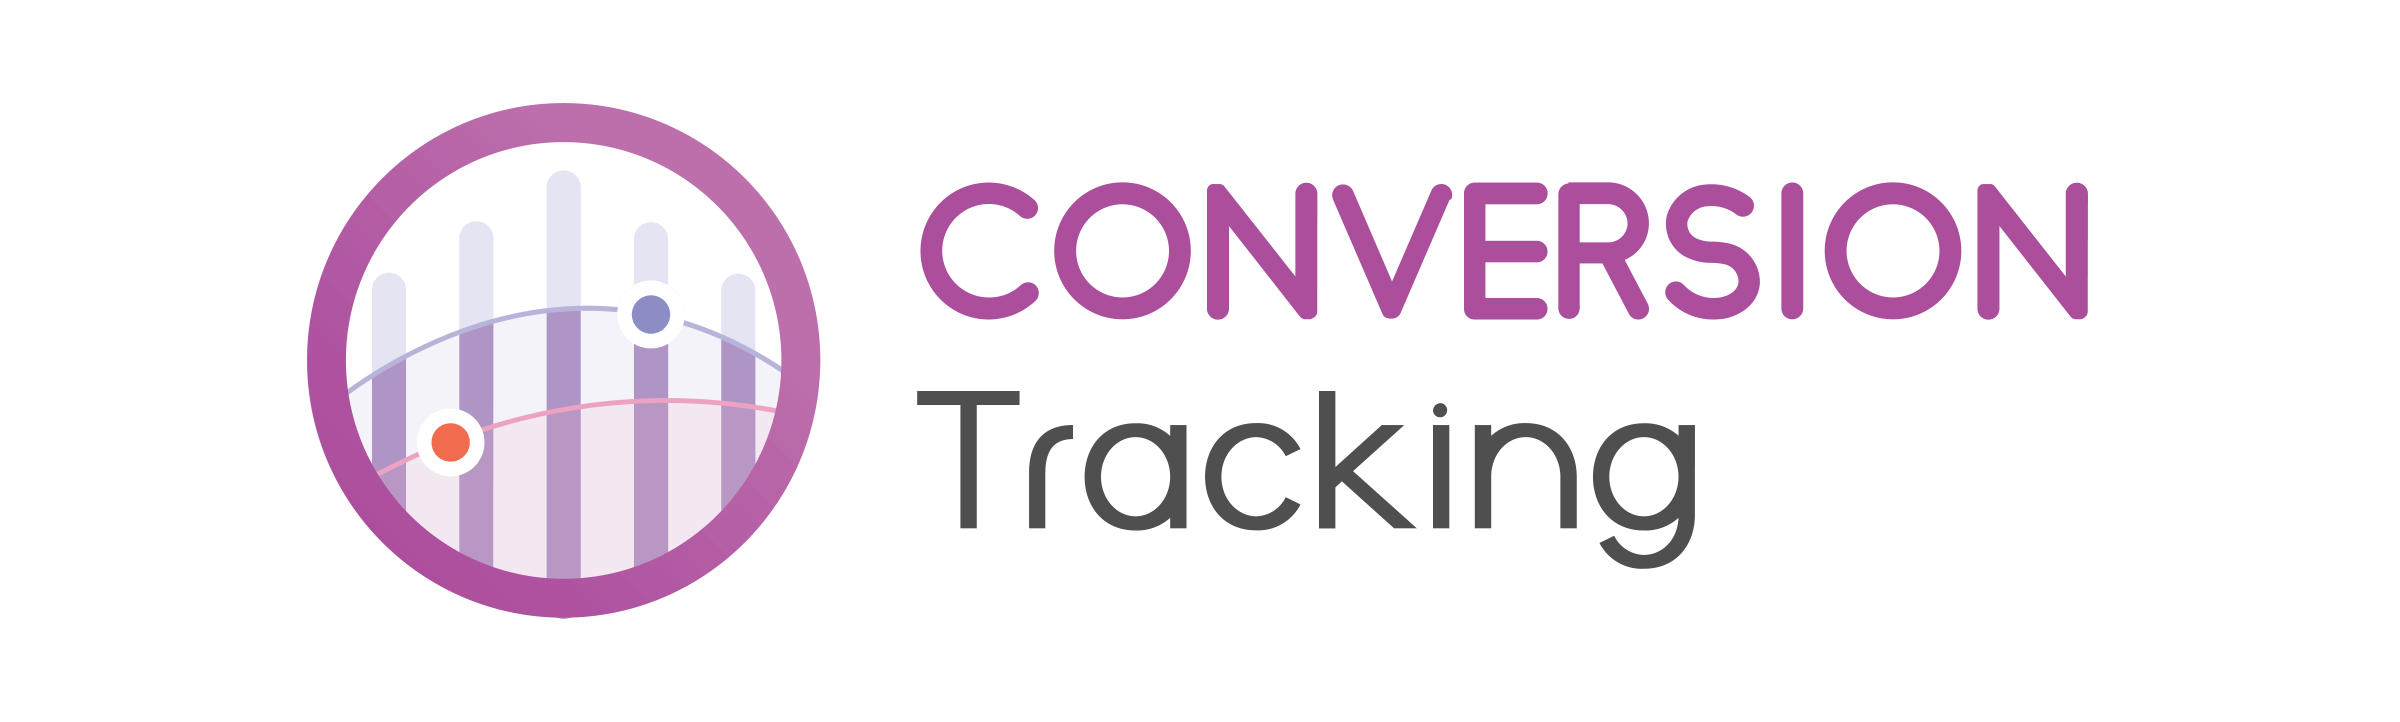 WP Conversation Tracking Logo